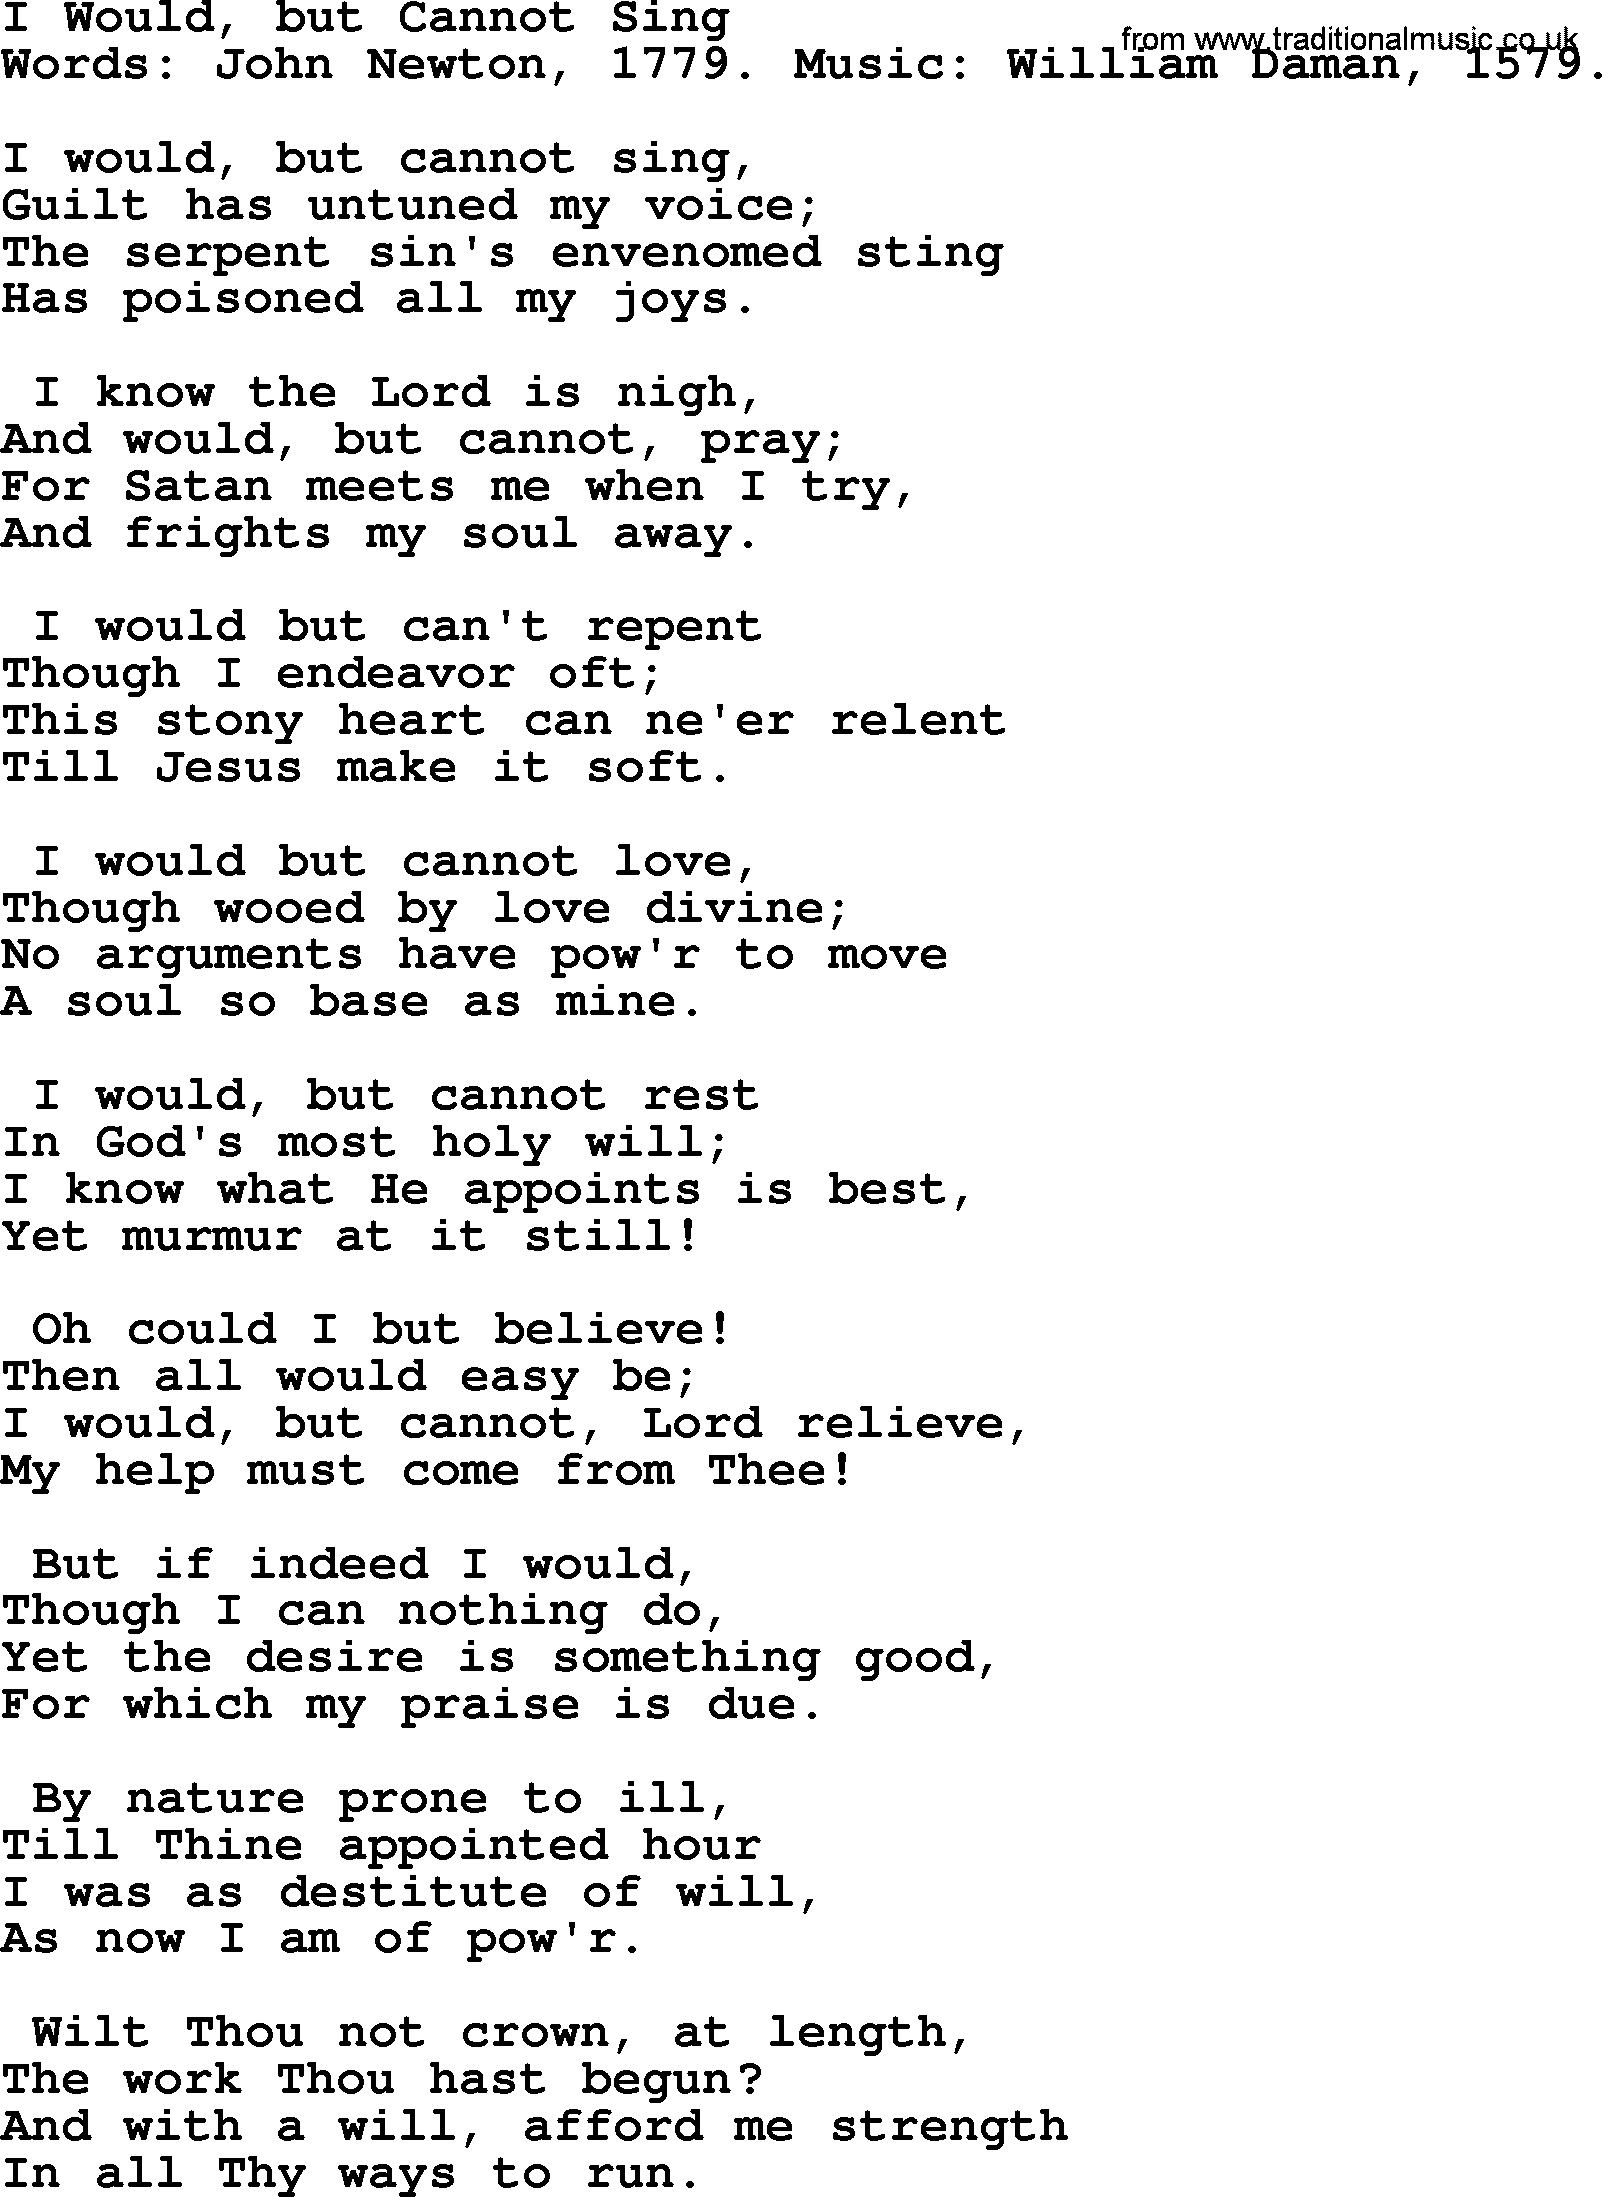 John Newton hymn: I Would, But Cannot Sing, lyrics